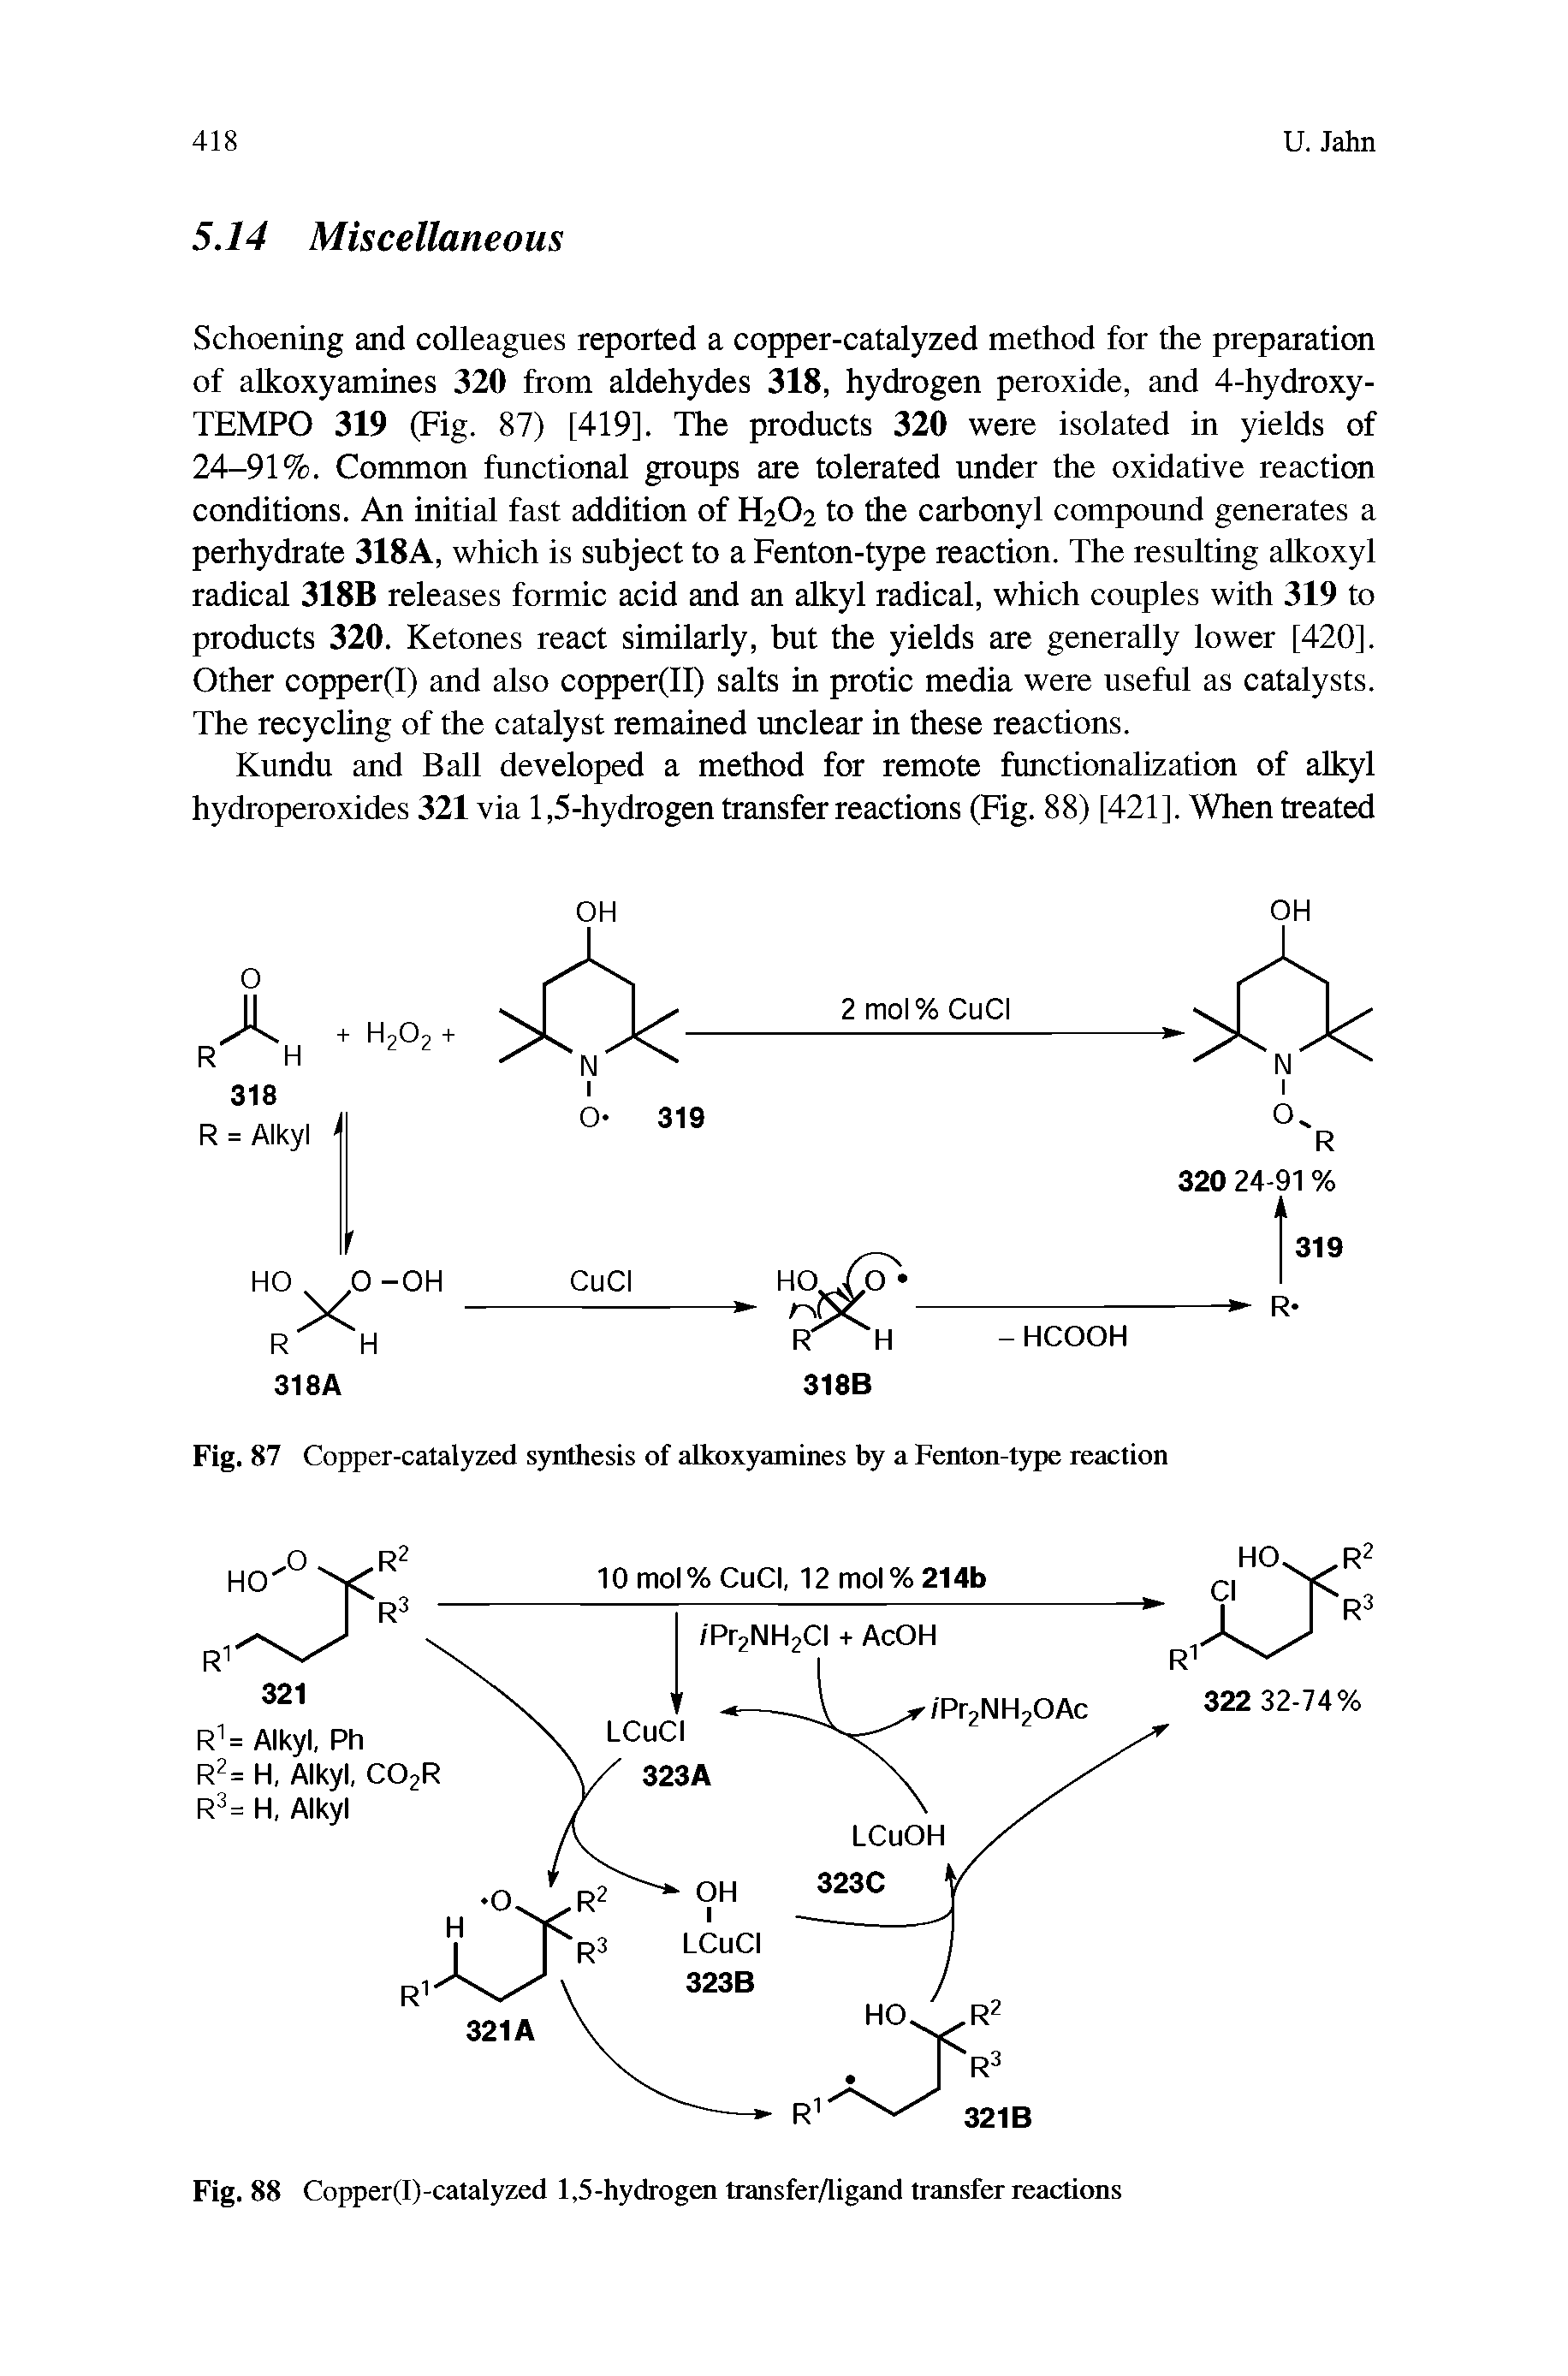 Fig. 88 Copper -catalyzed 1,5-hydrogen transfer/ligand transfer reactions...